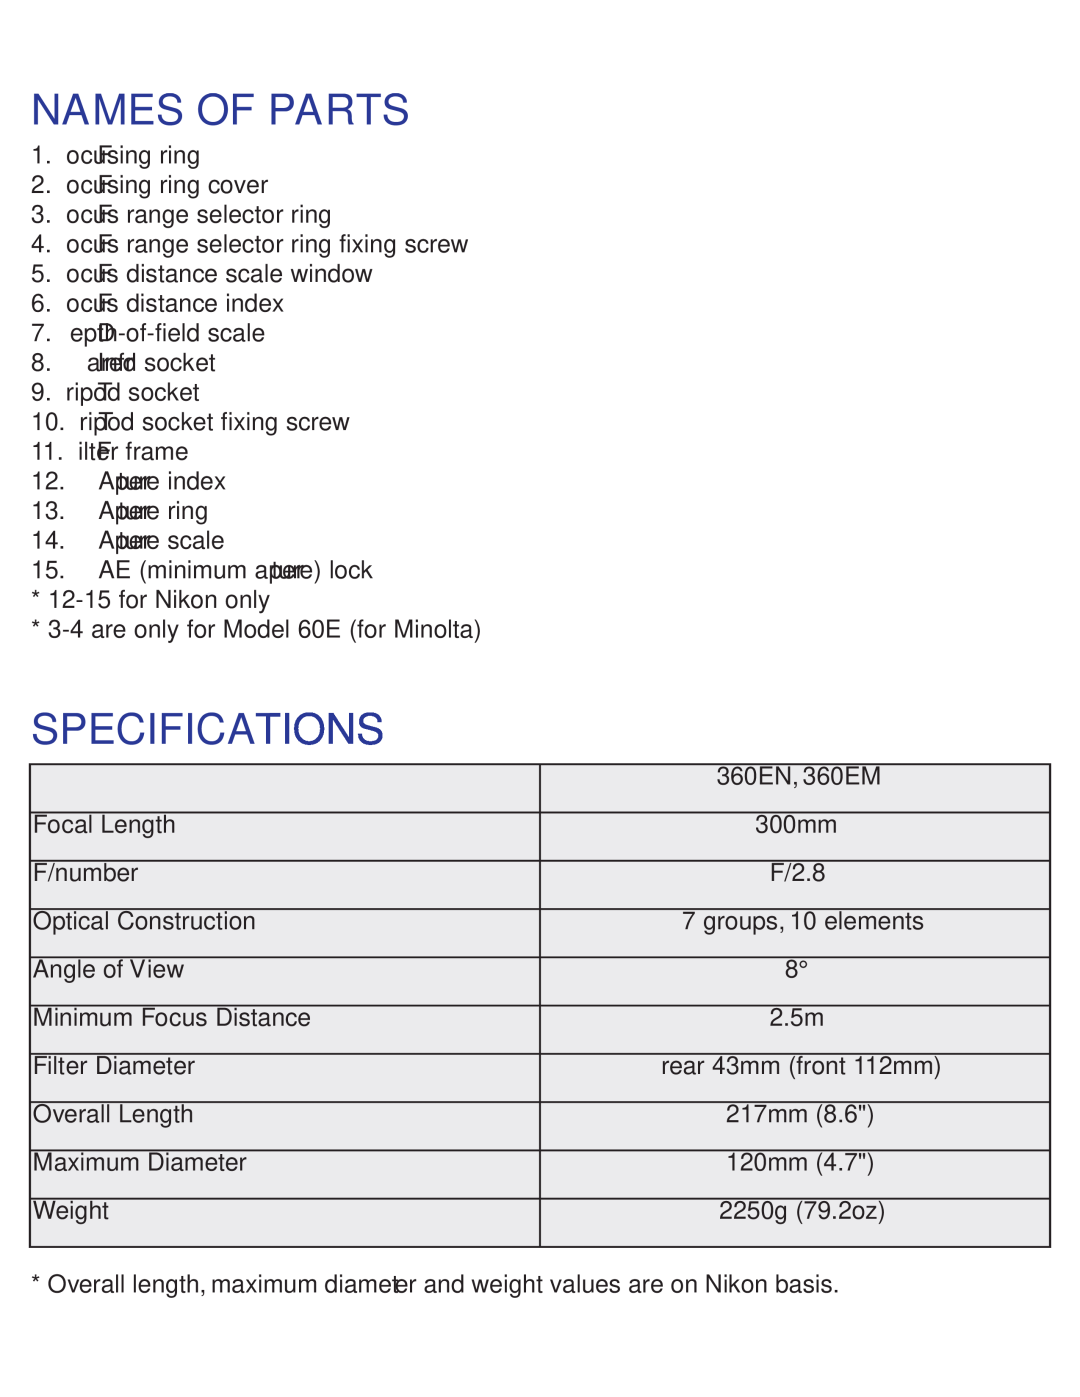 Tamron instruction manual Names Of Parts, Specifications, 360EN, 360EM 